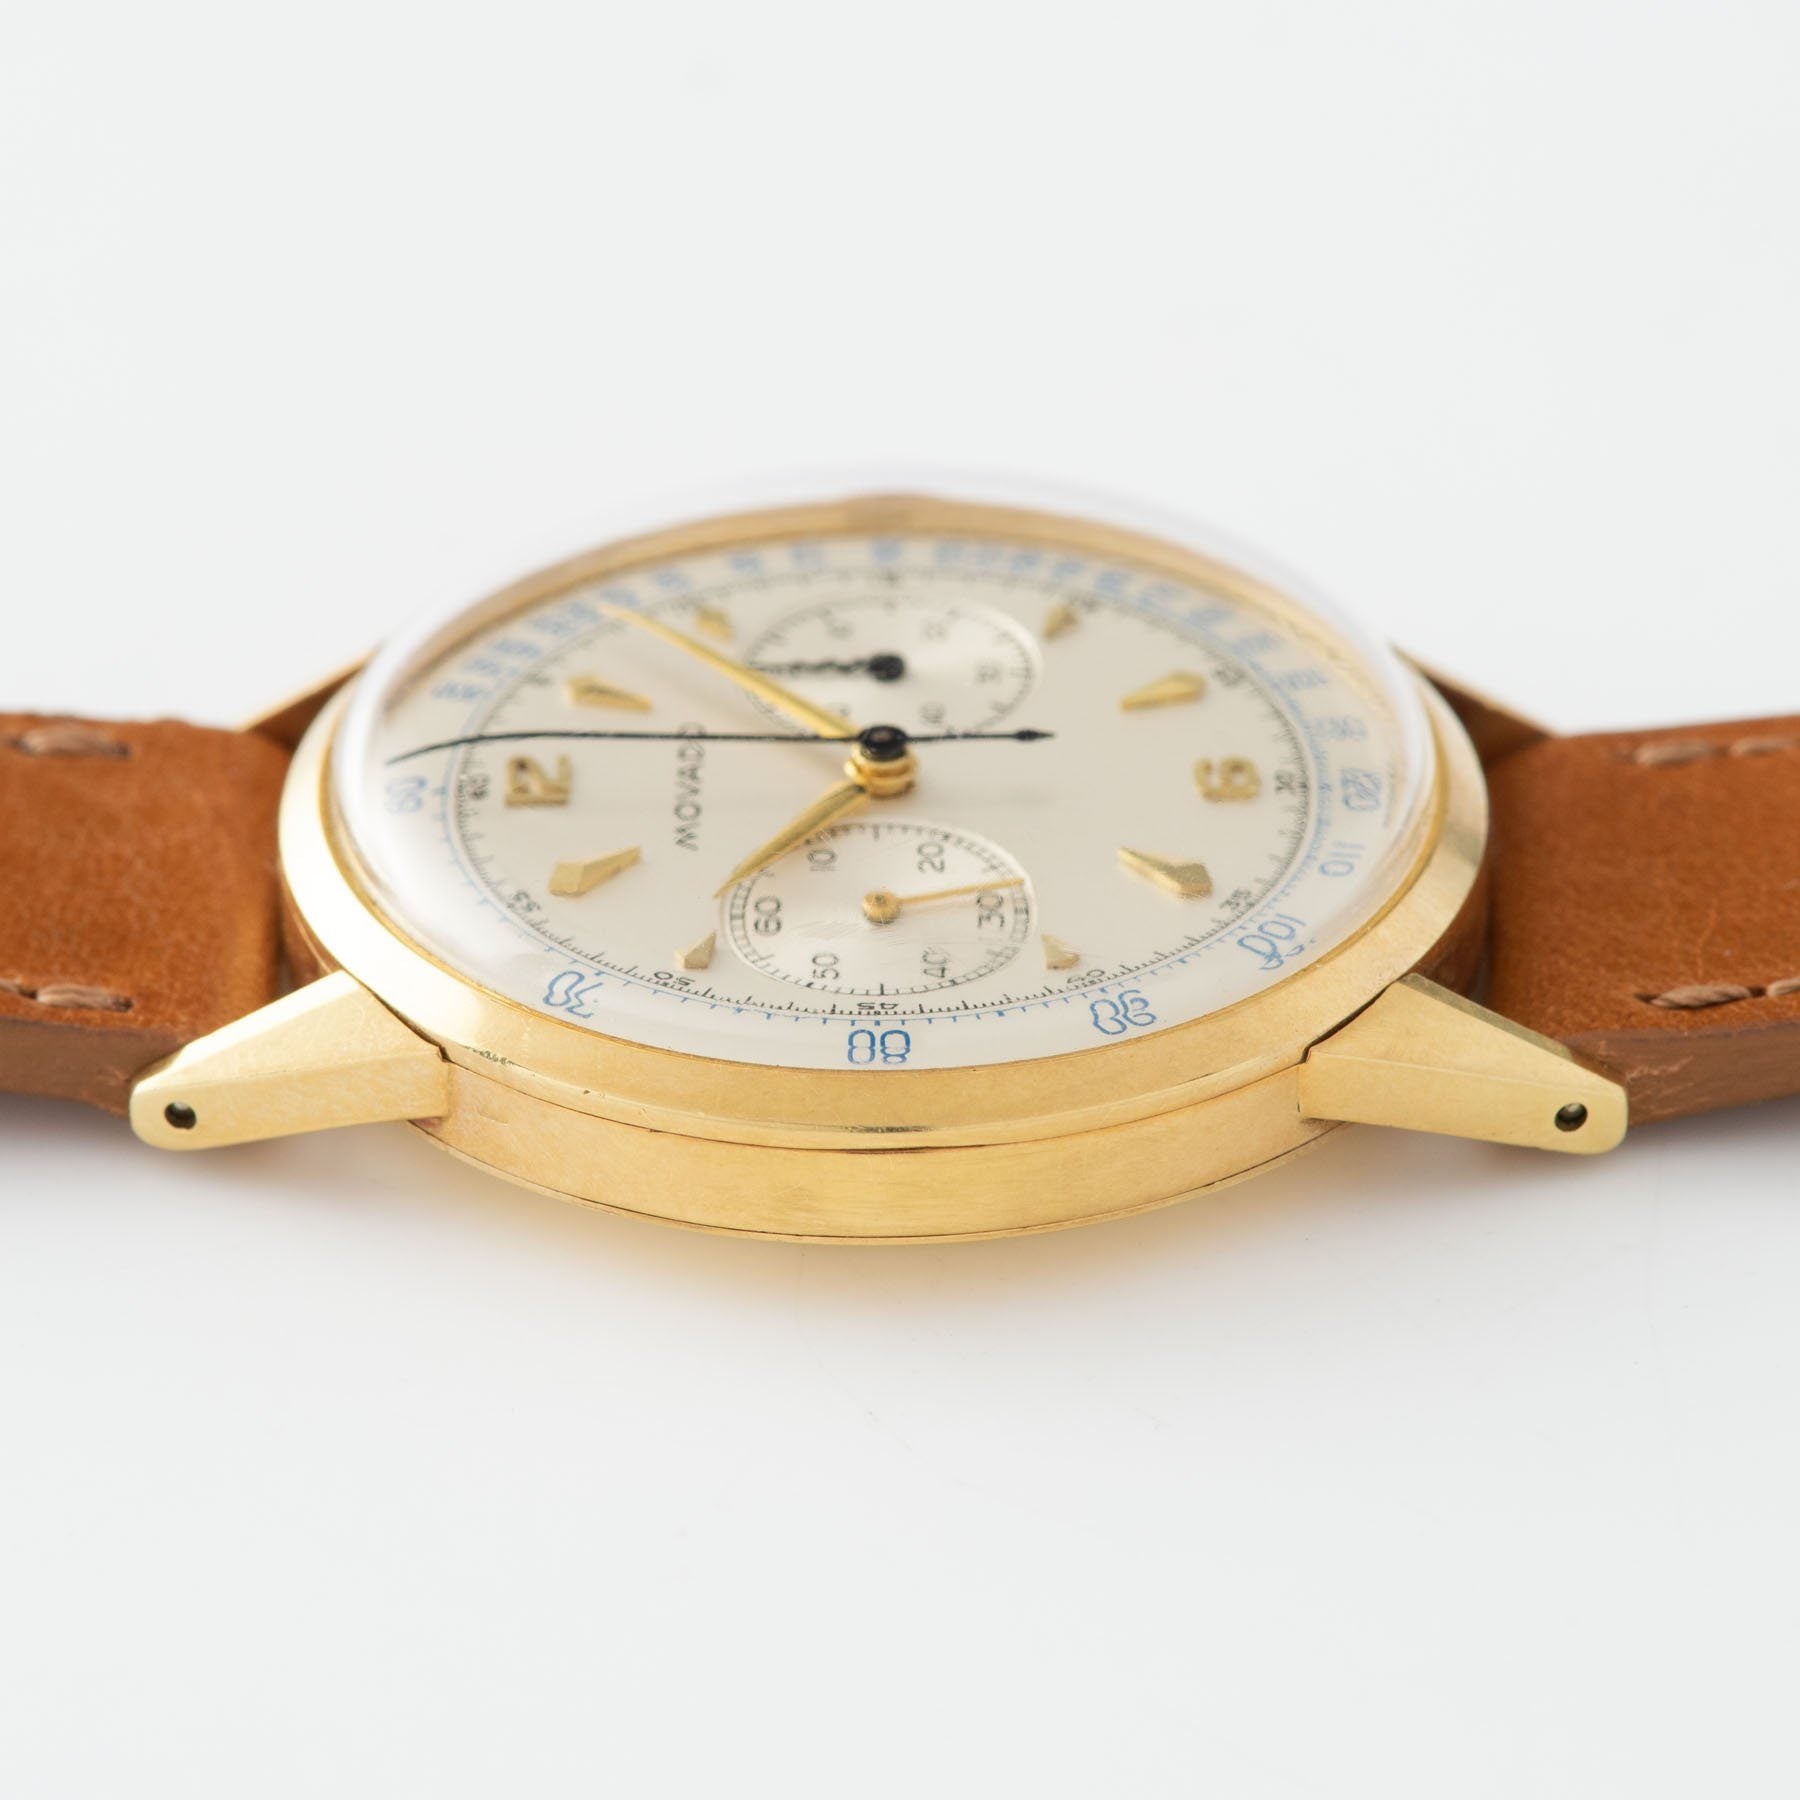 Movado M90 Yellow Gold Chronograph Watch